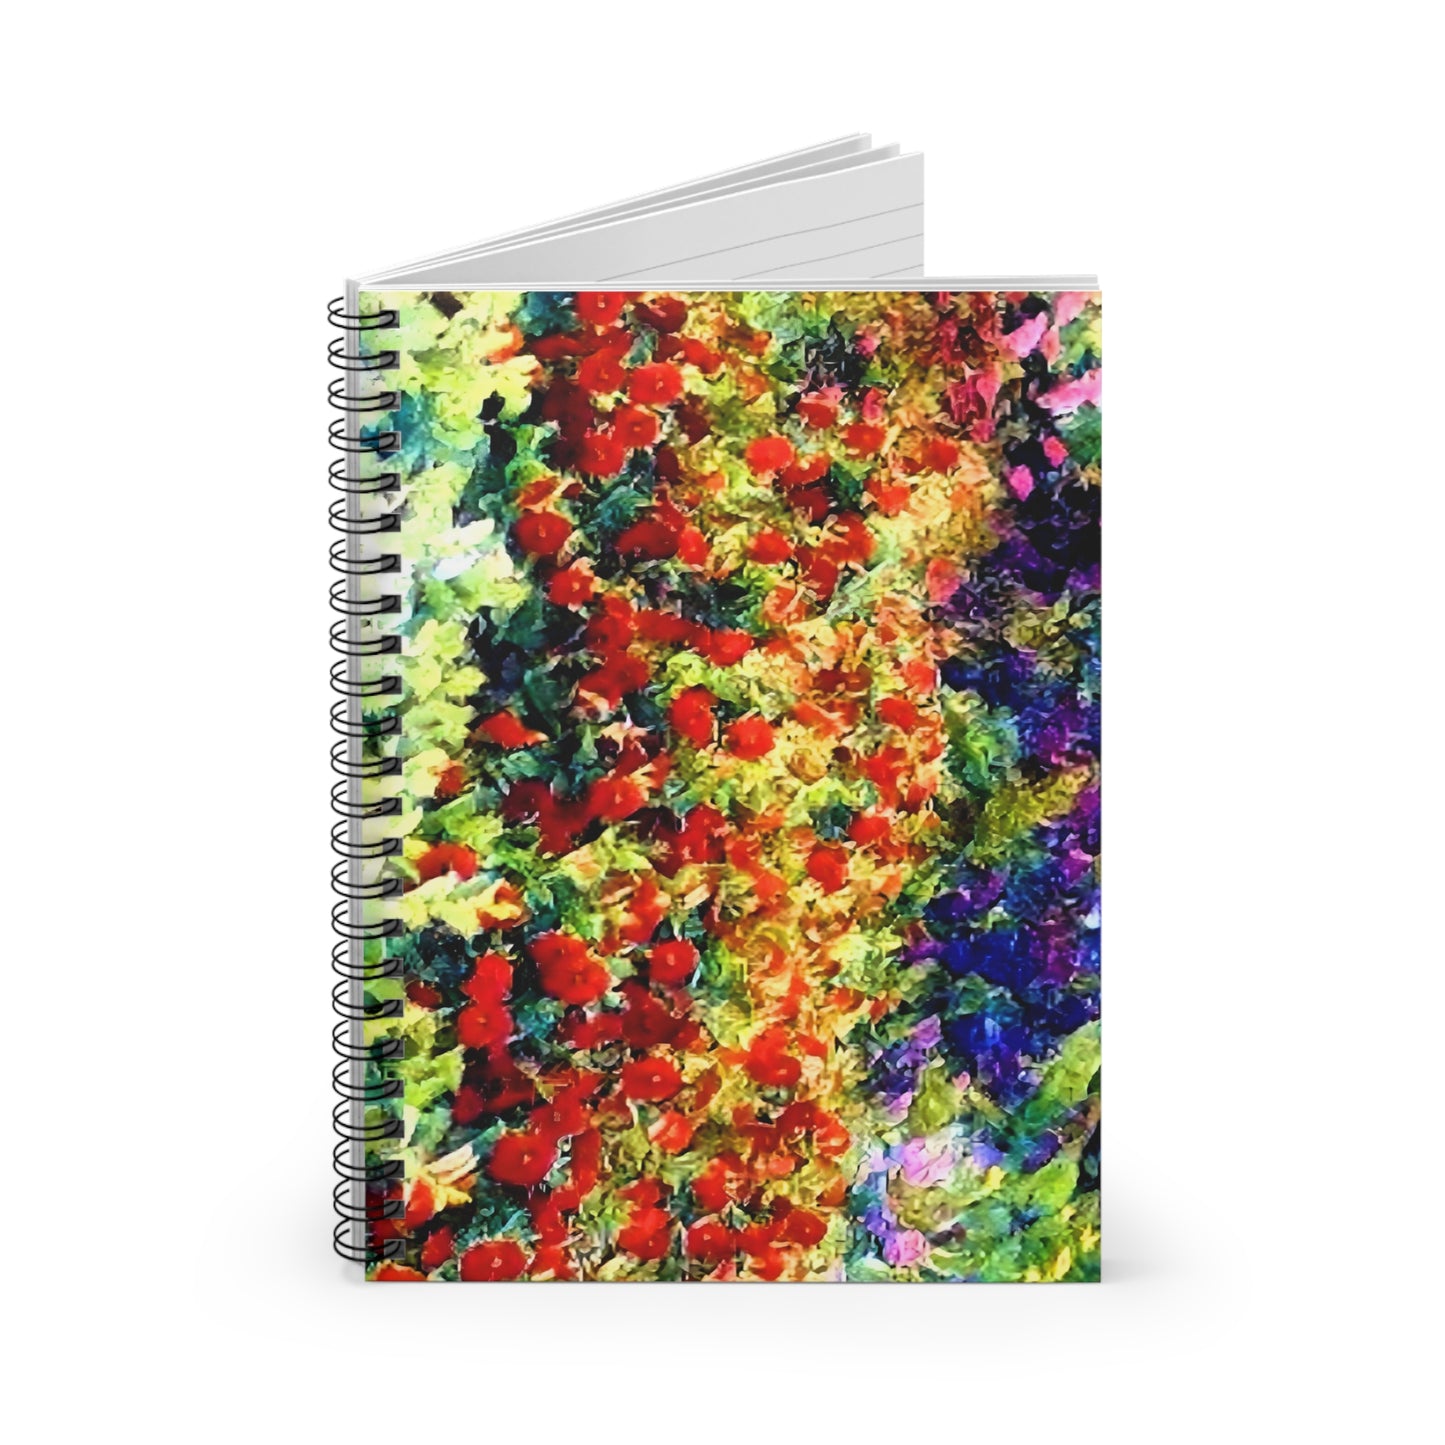 Impressionistic Spring Flowers Spiral Notebook - Ruled Line